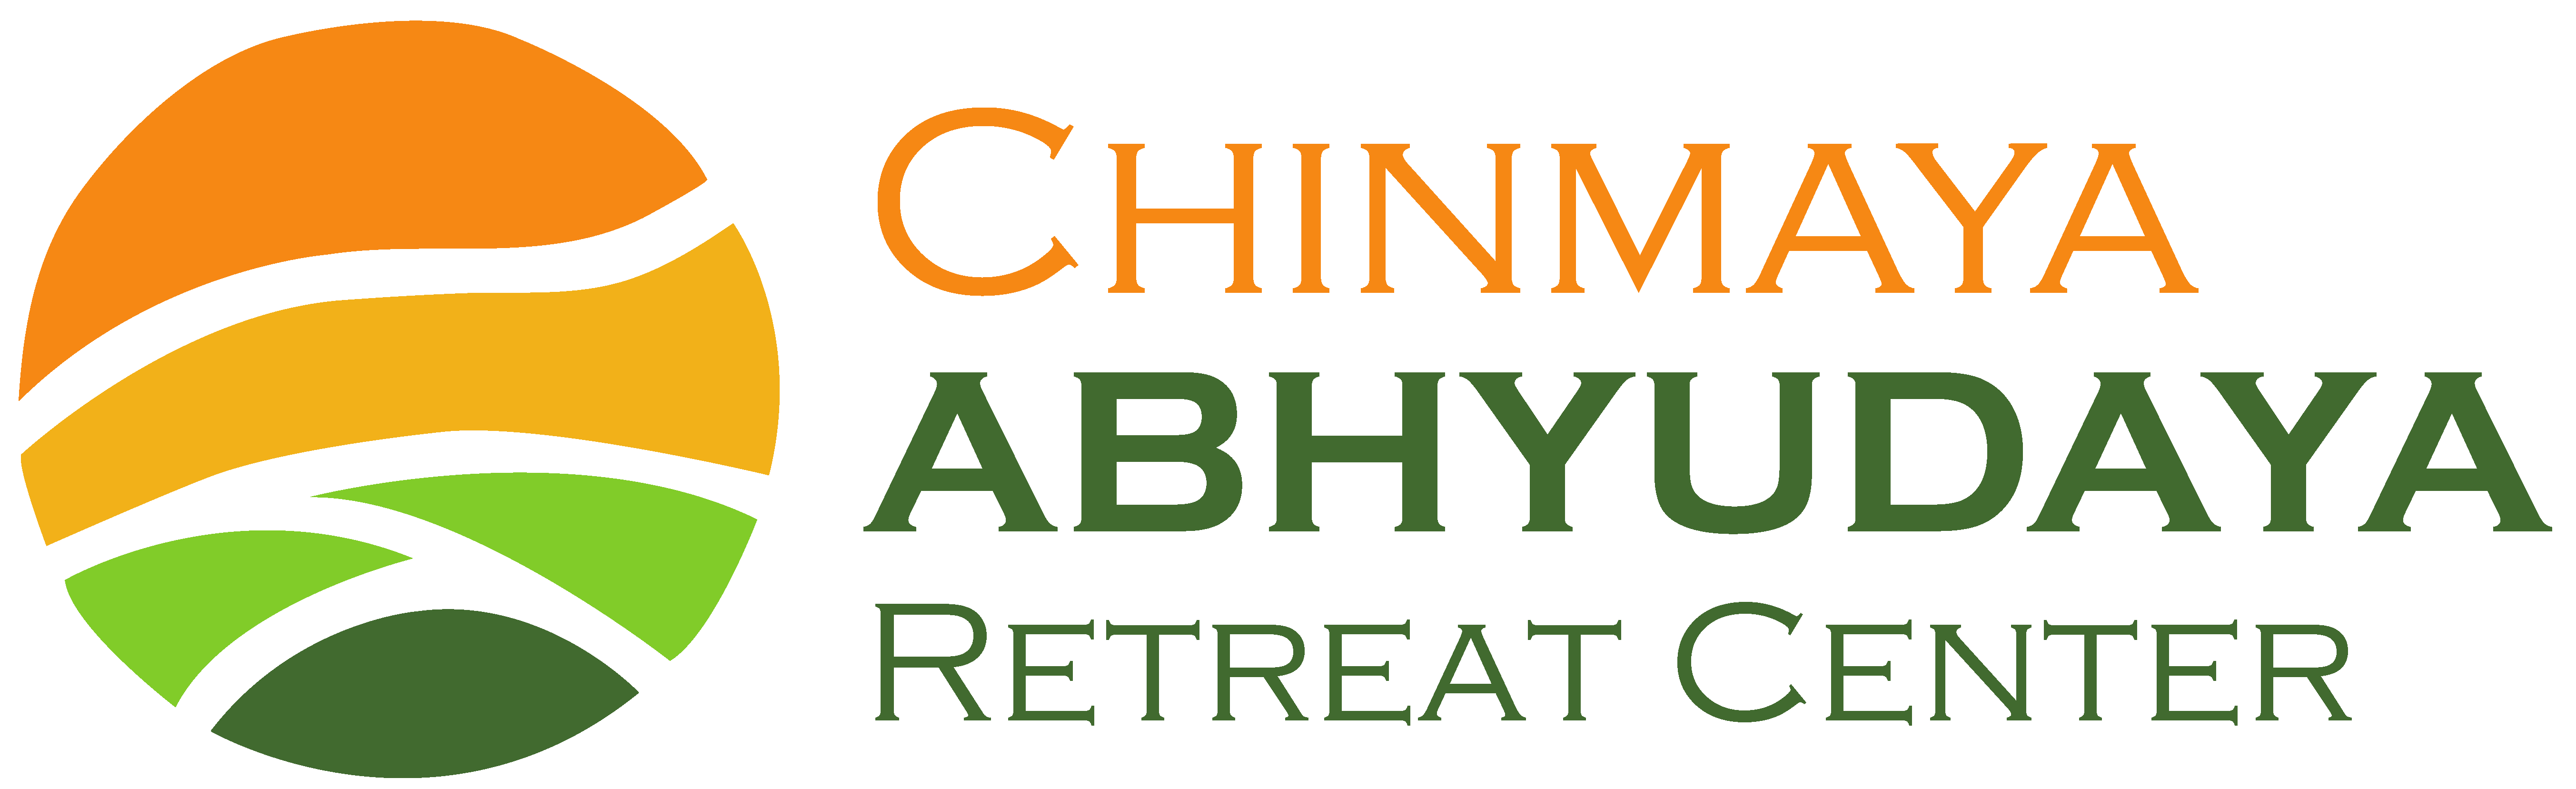 Chinmaya Abhyudaya Retreat Center